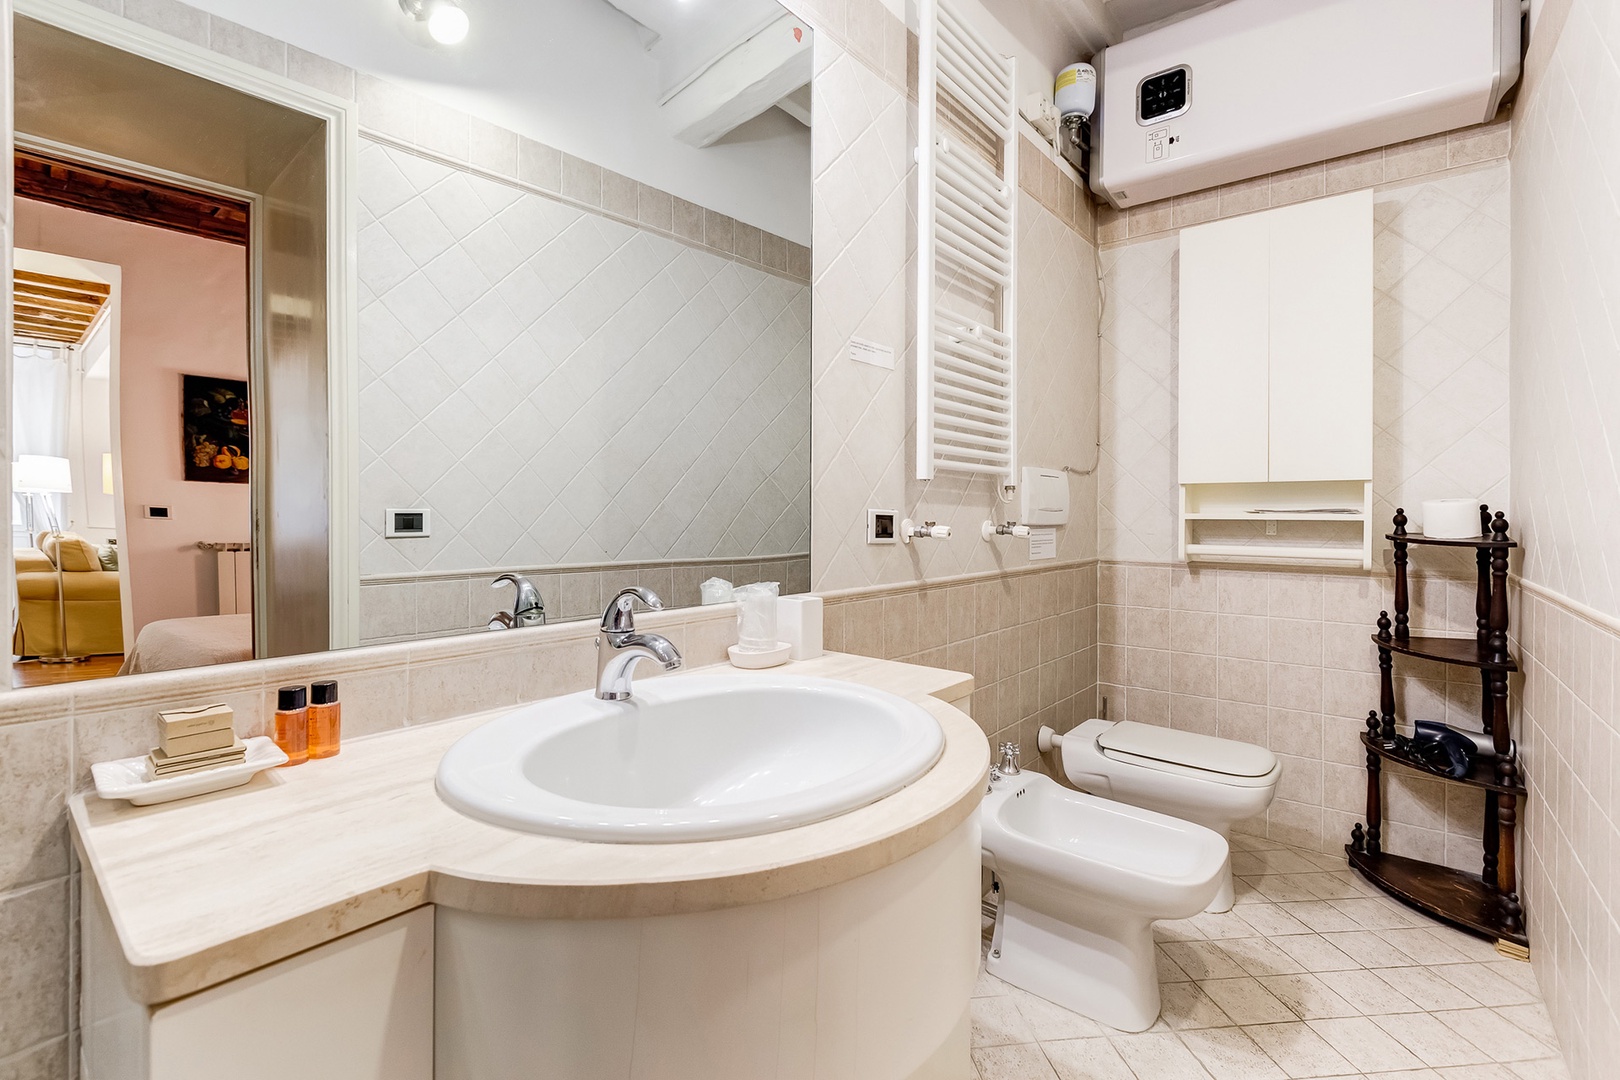 Compact bathroom has shower stall, washing machine, sink, toilet and bidet, heated towel rack.